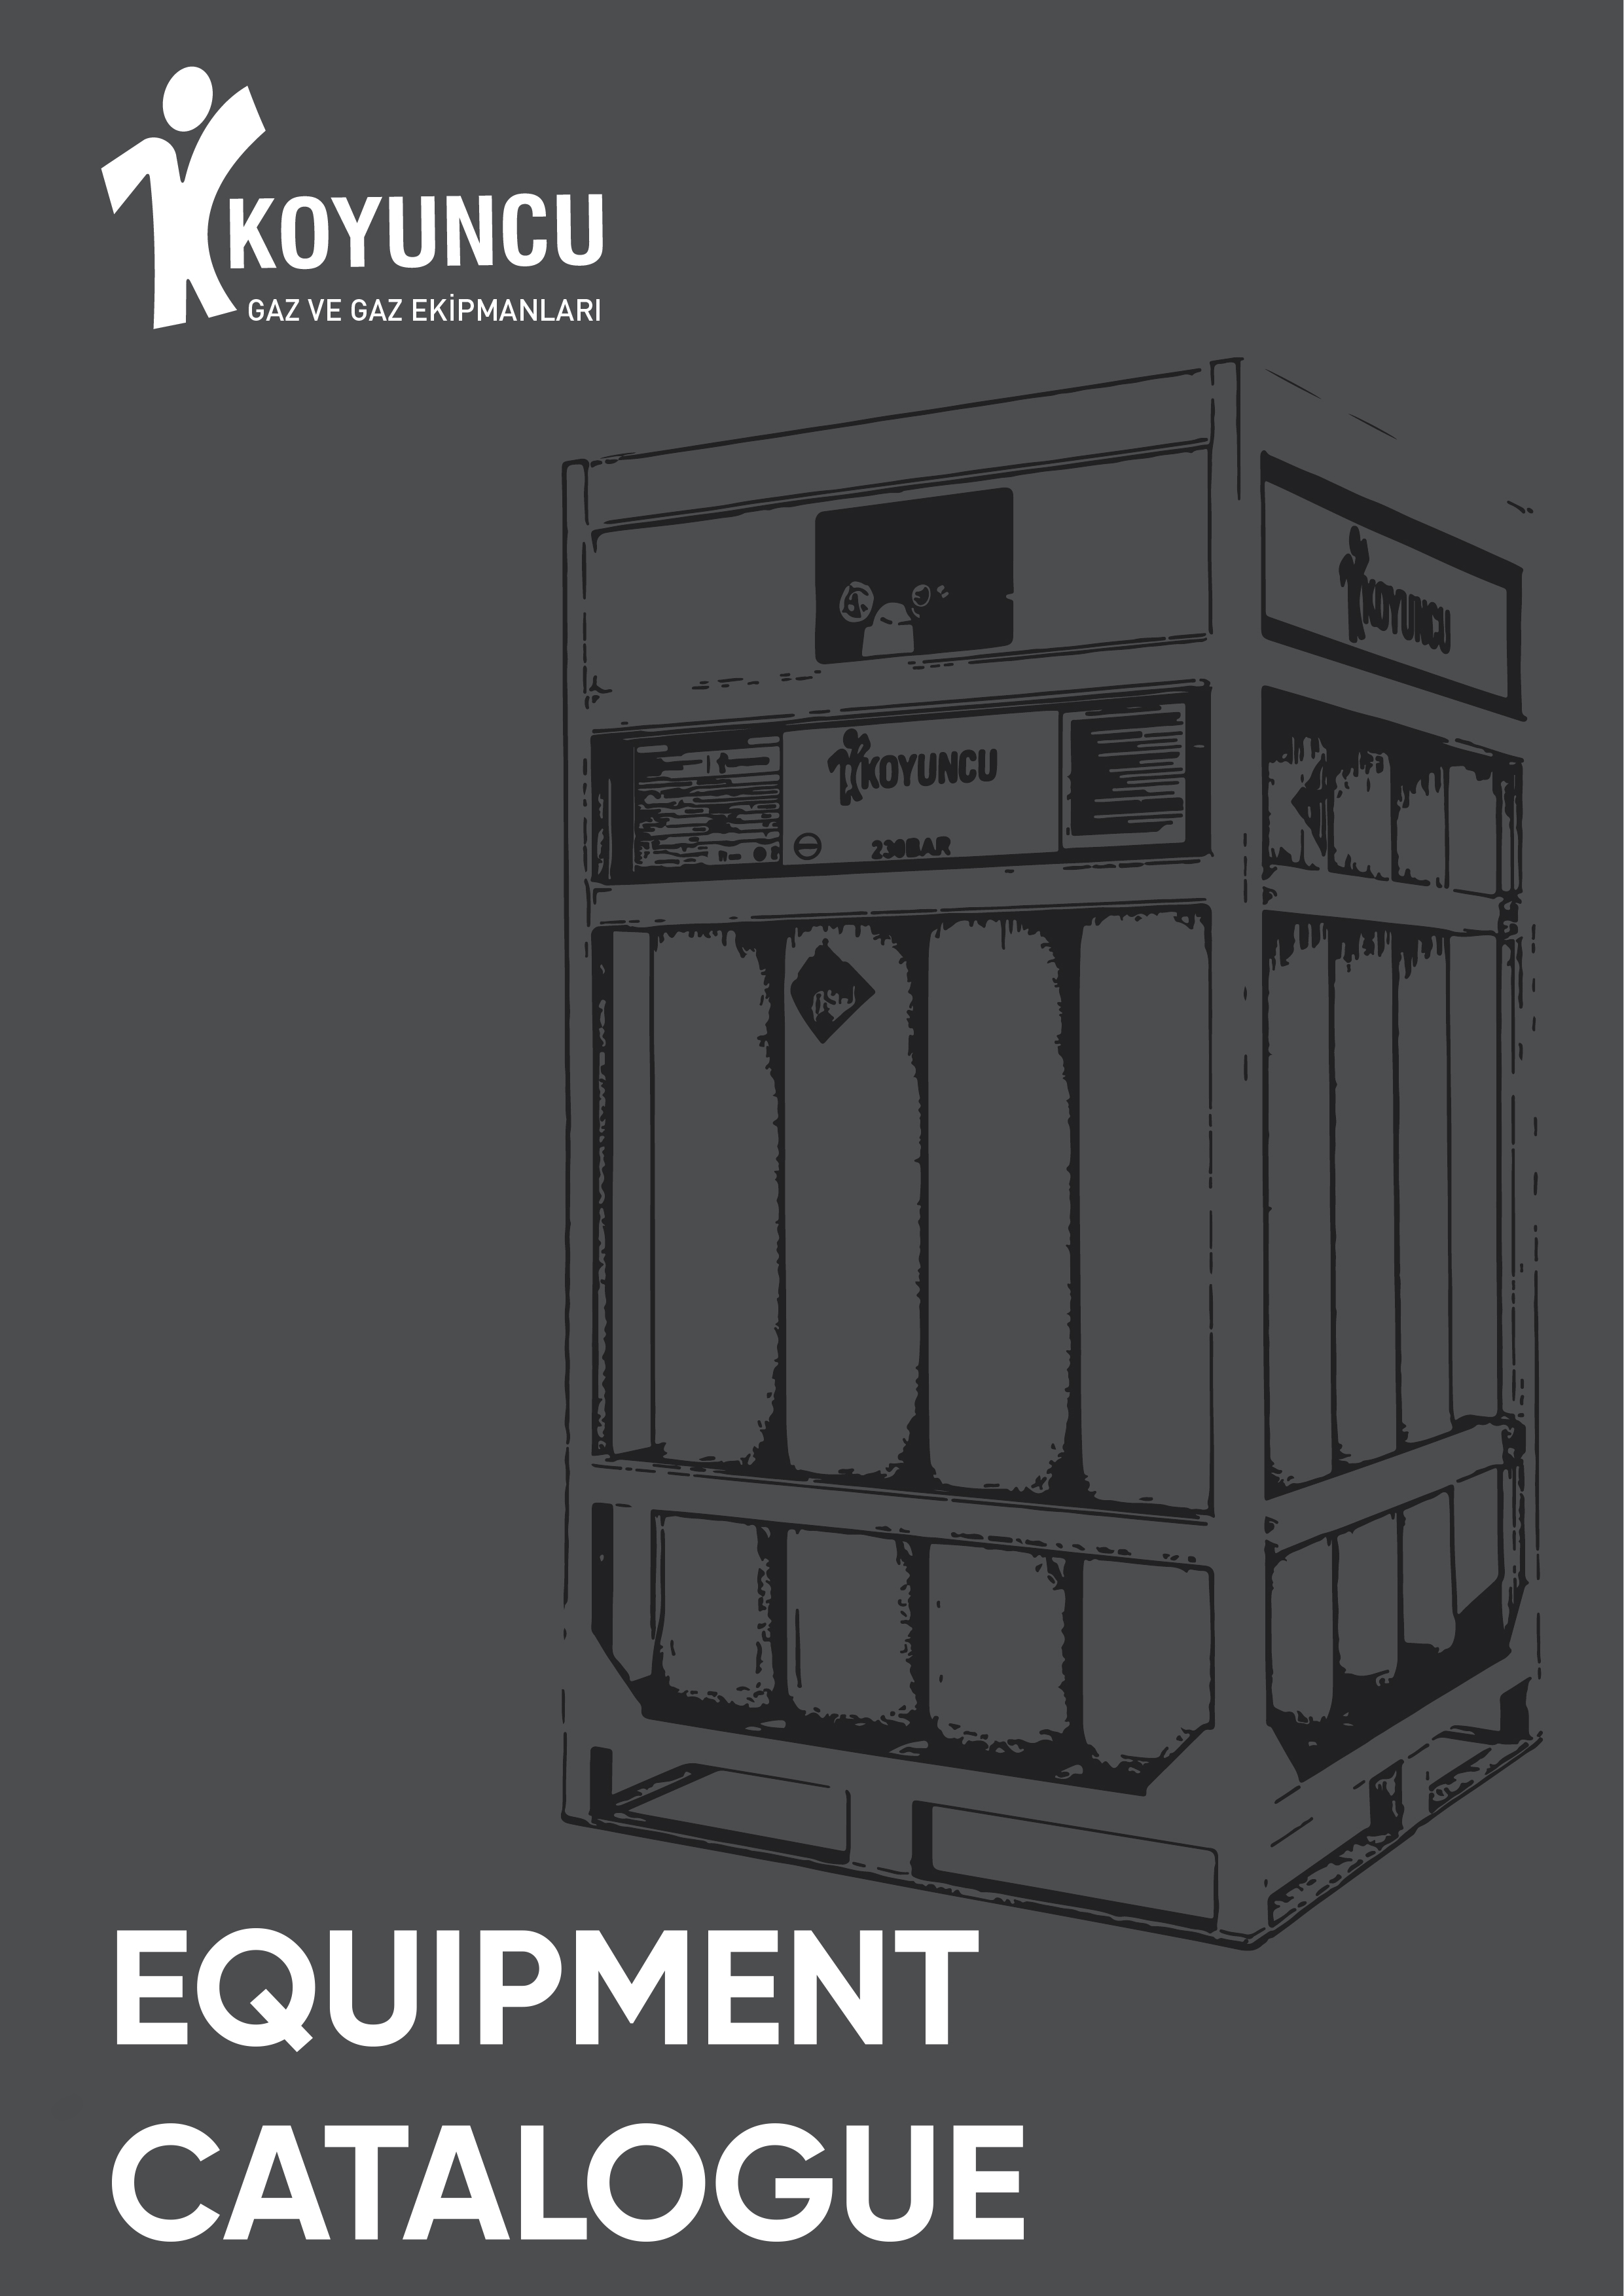 Koyuncu Gas Equipment Catalogue